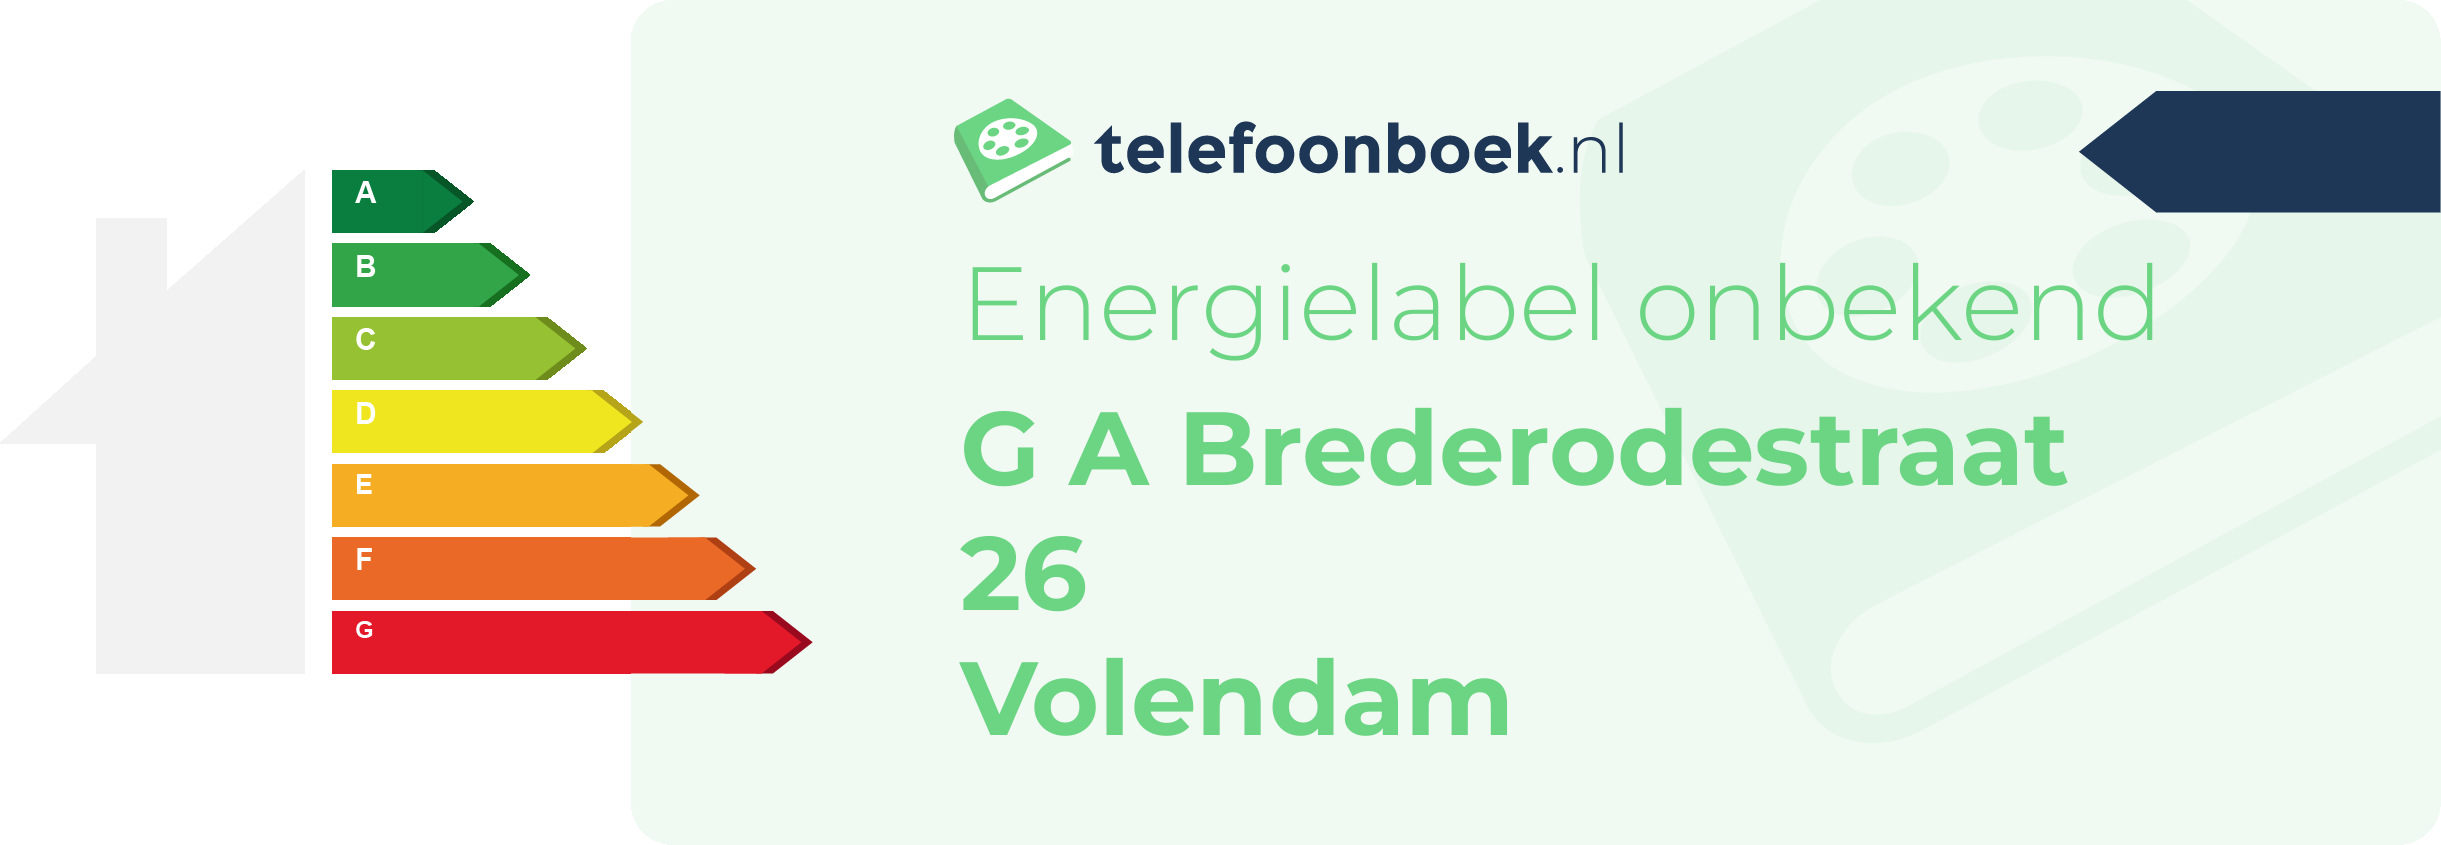 Energielabel G A Brederodestraat 26 Volendam